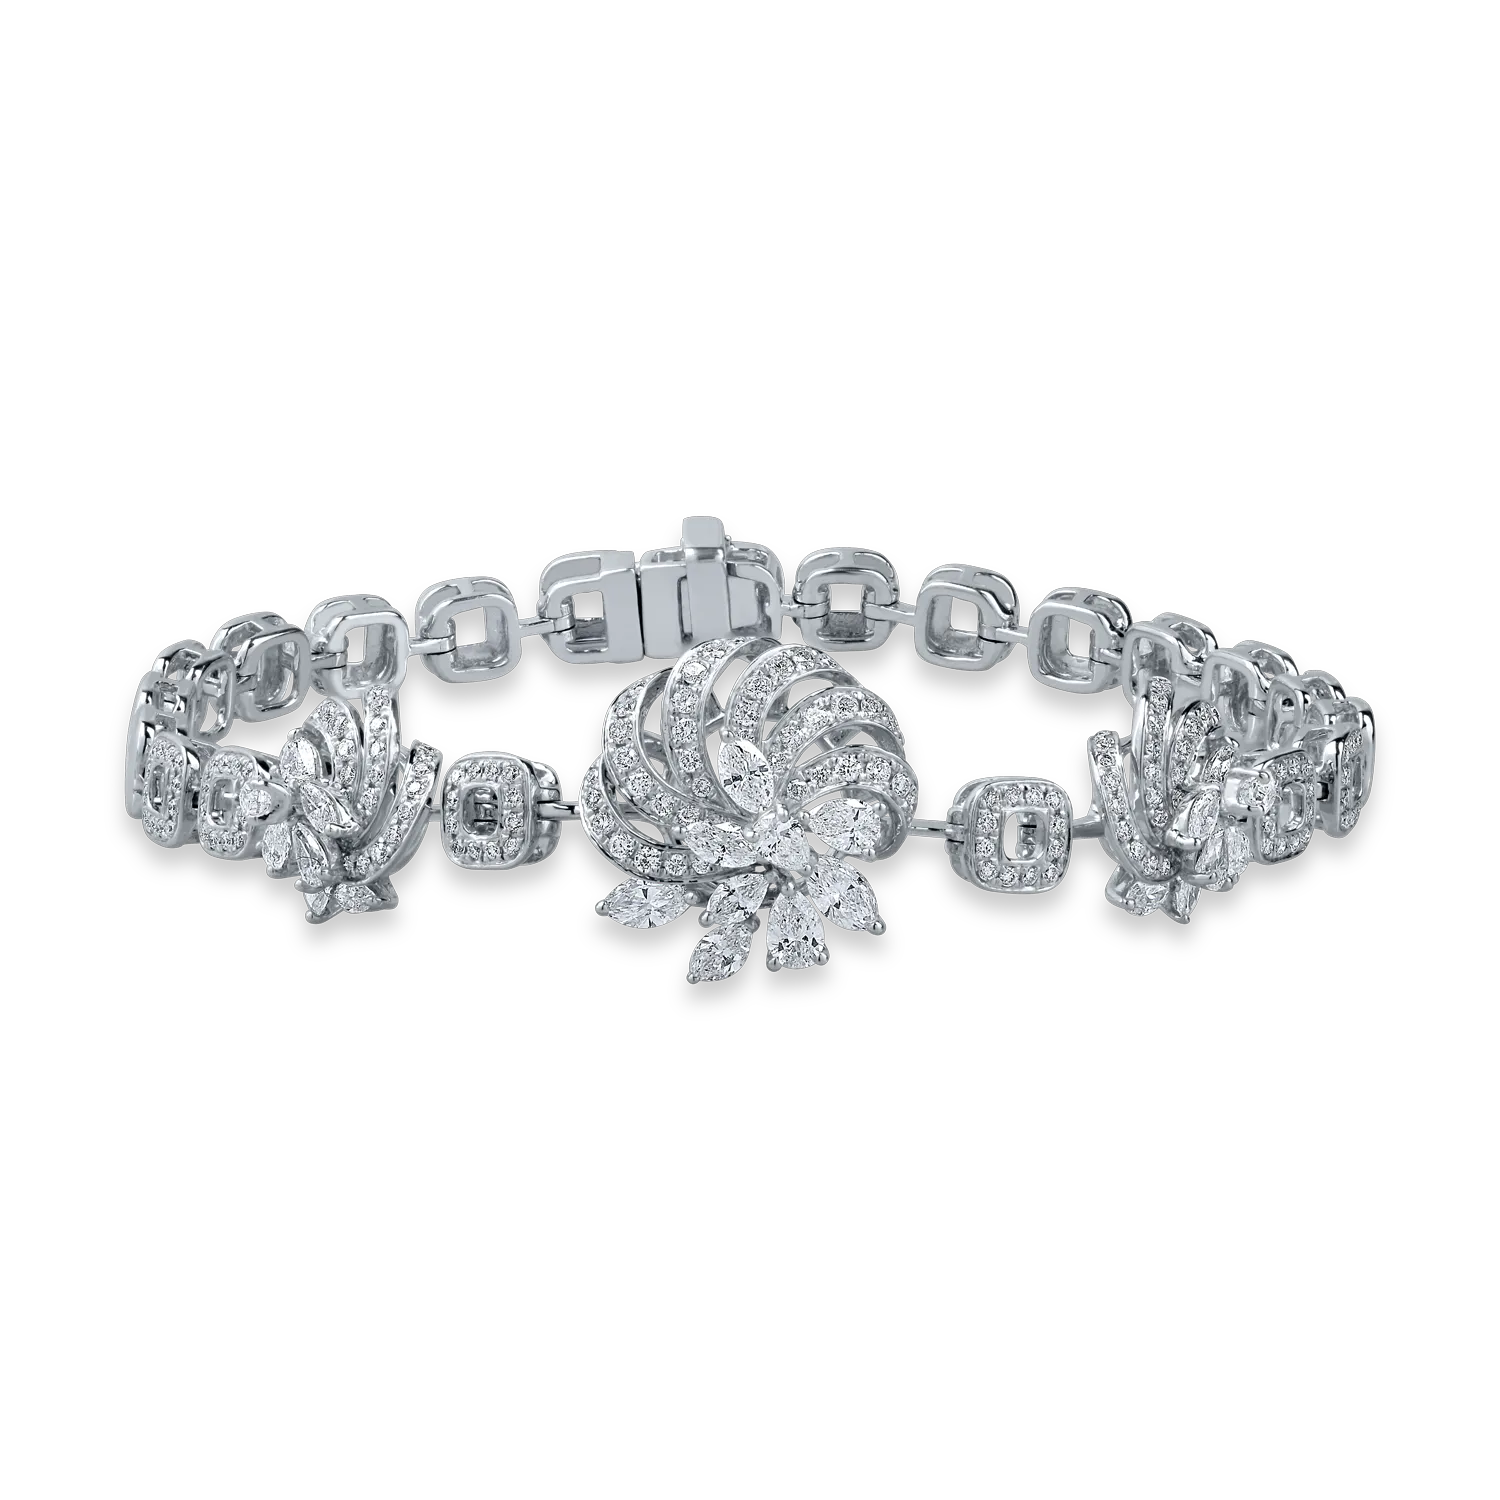 White gold flower pendants bracelet with 2.16ct diamonds